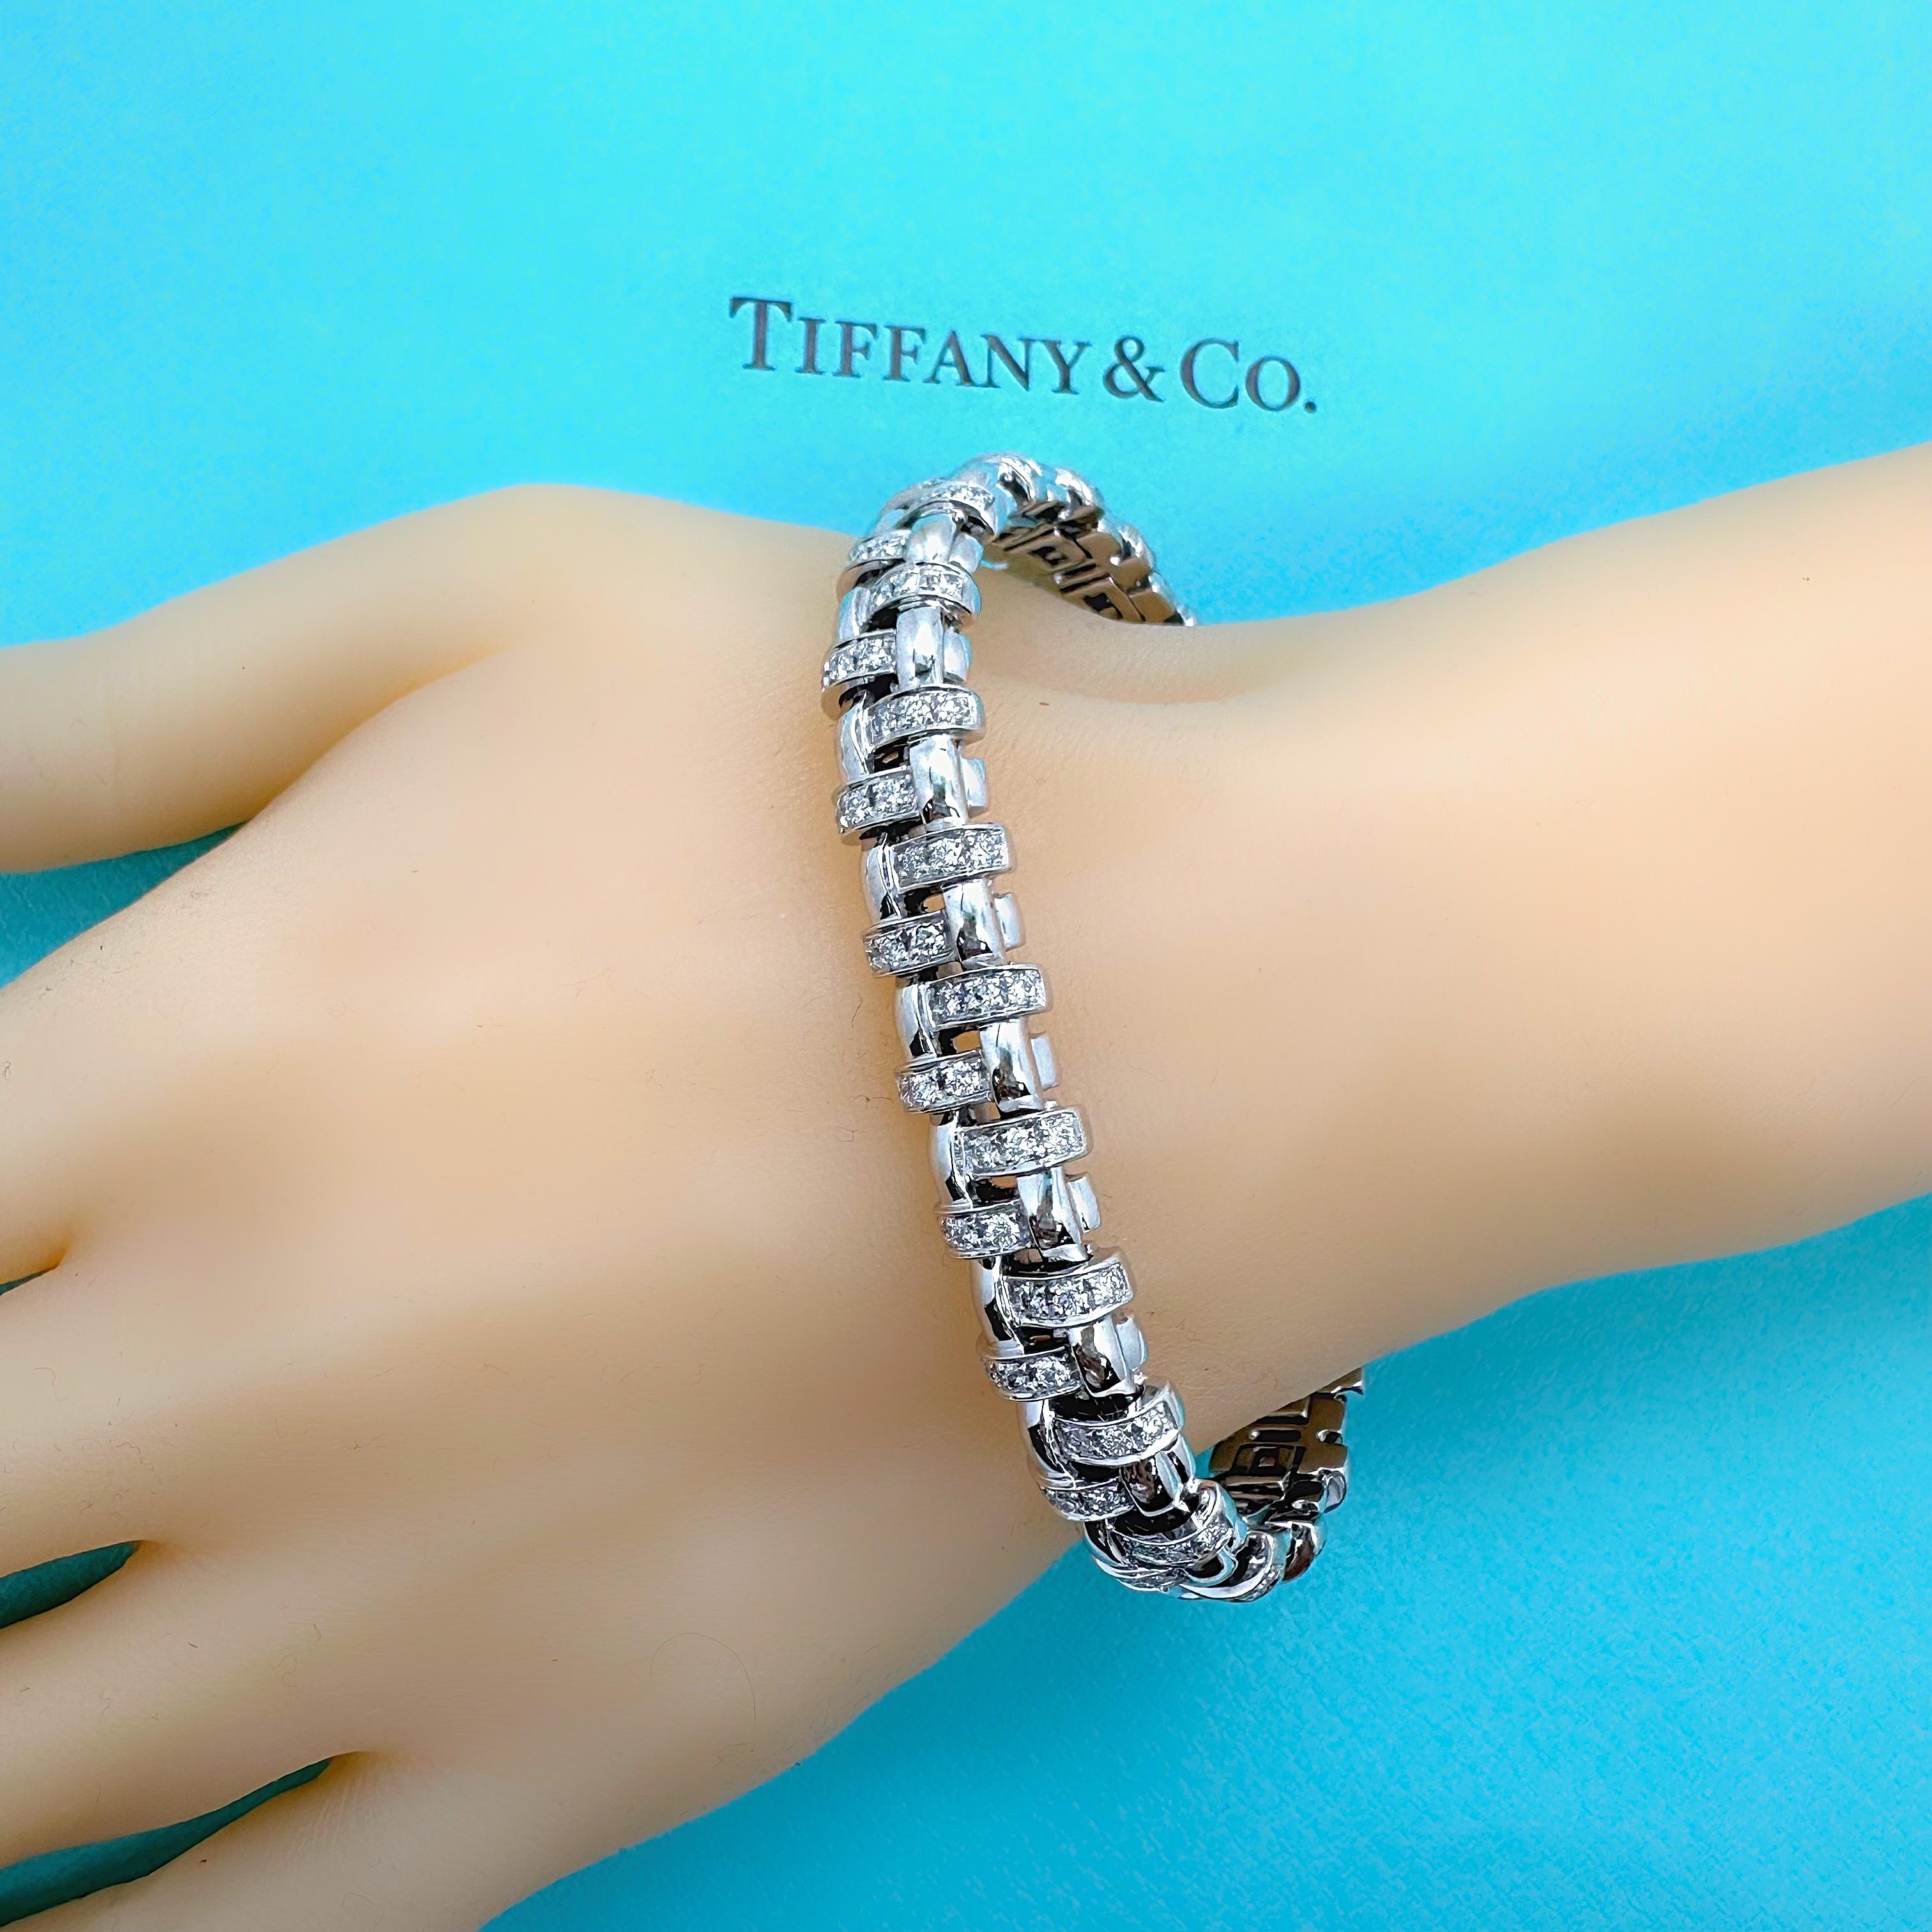 Tiffany & Co. Vannerie Basket Weave Diamond Bracelet in 18kt White Gold For Sale 3